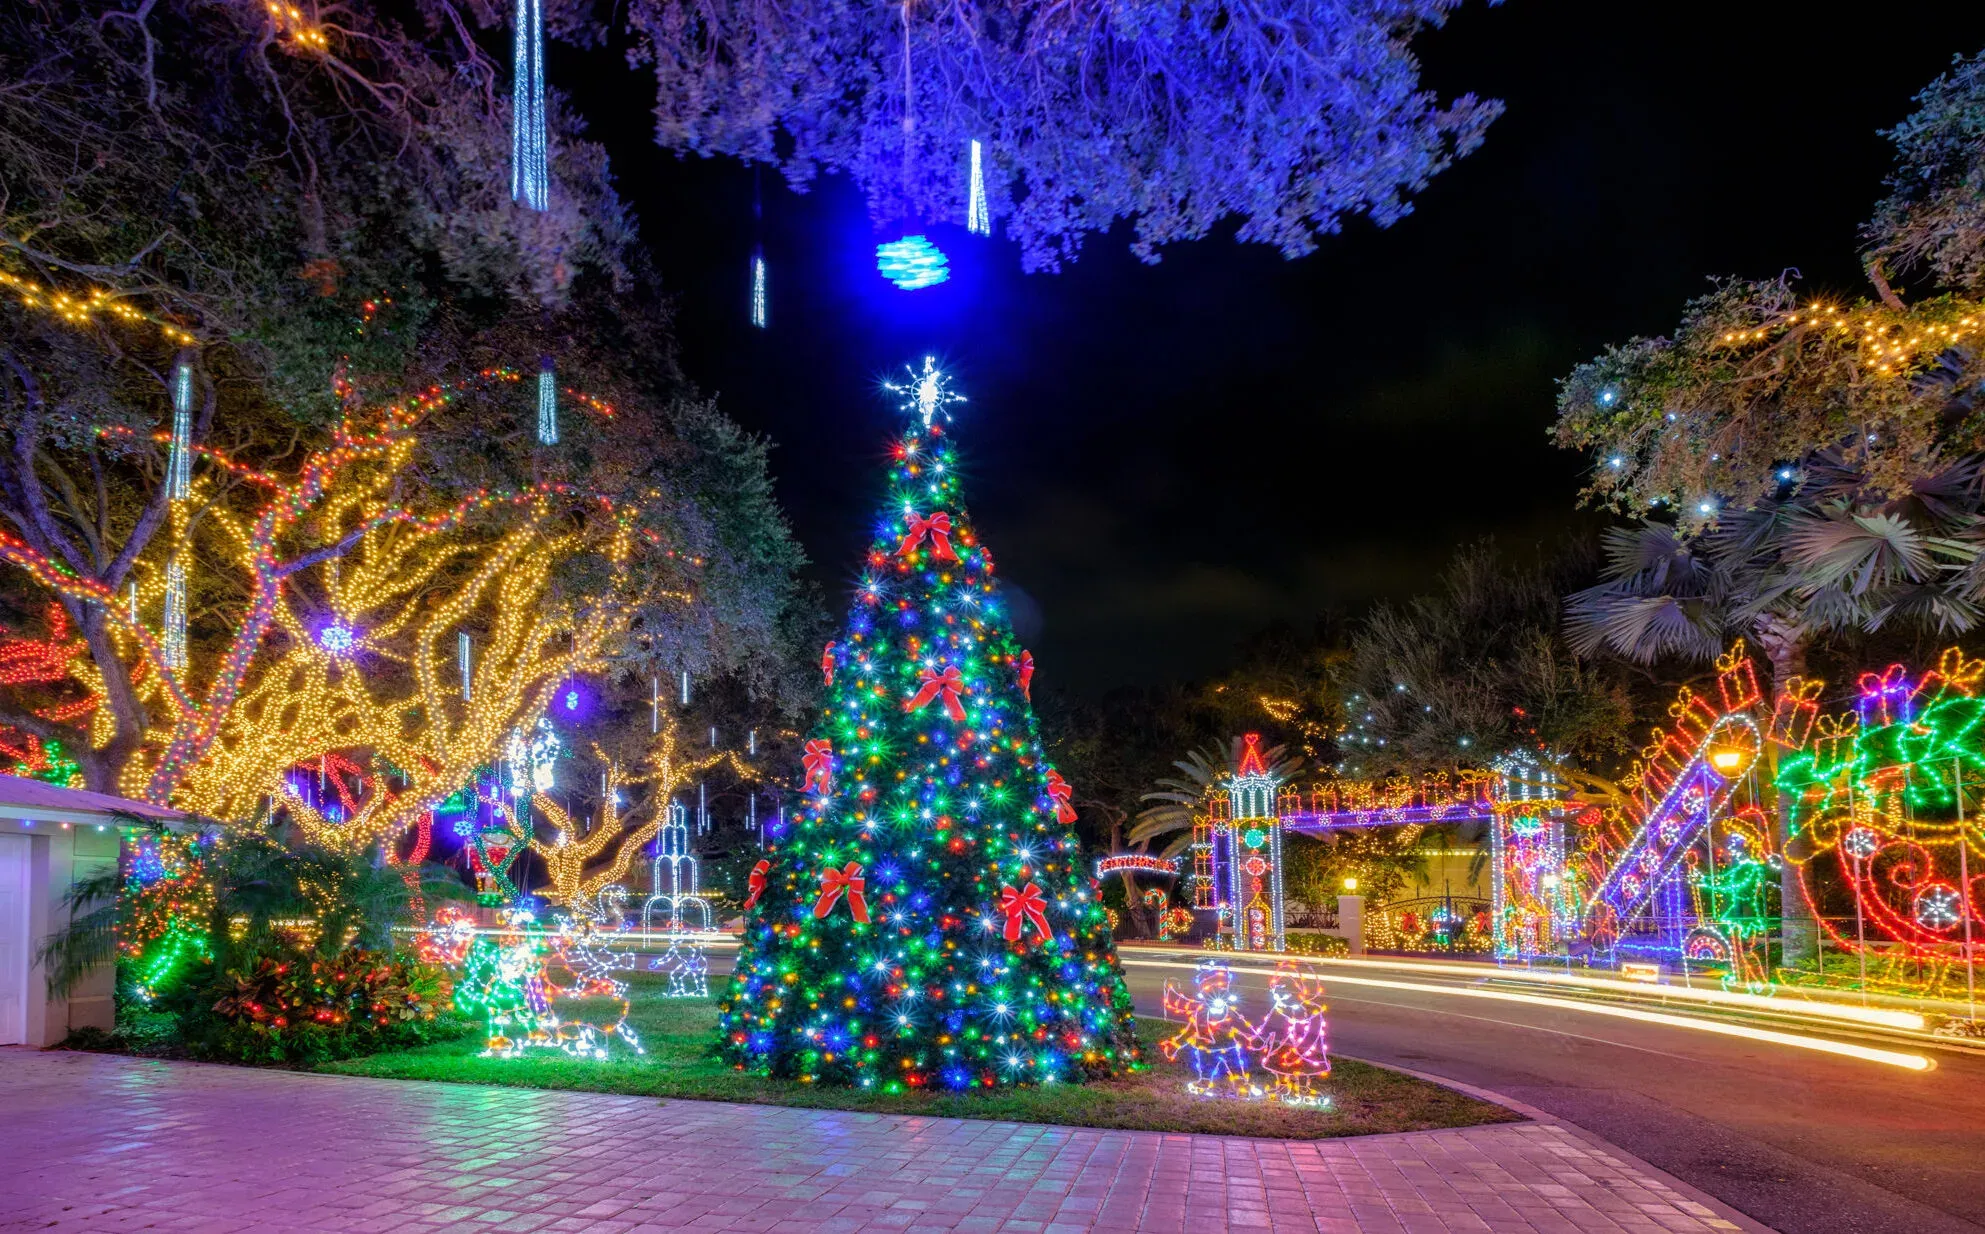 Jungle Bells Cirque-A Wild Christmas Adventure in - Miami, FL